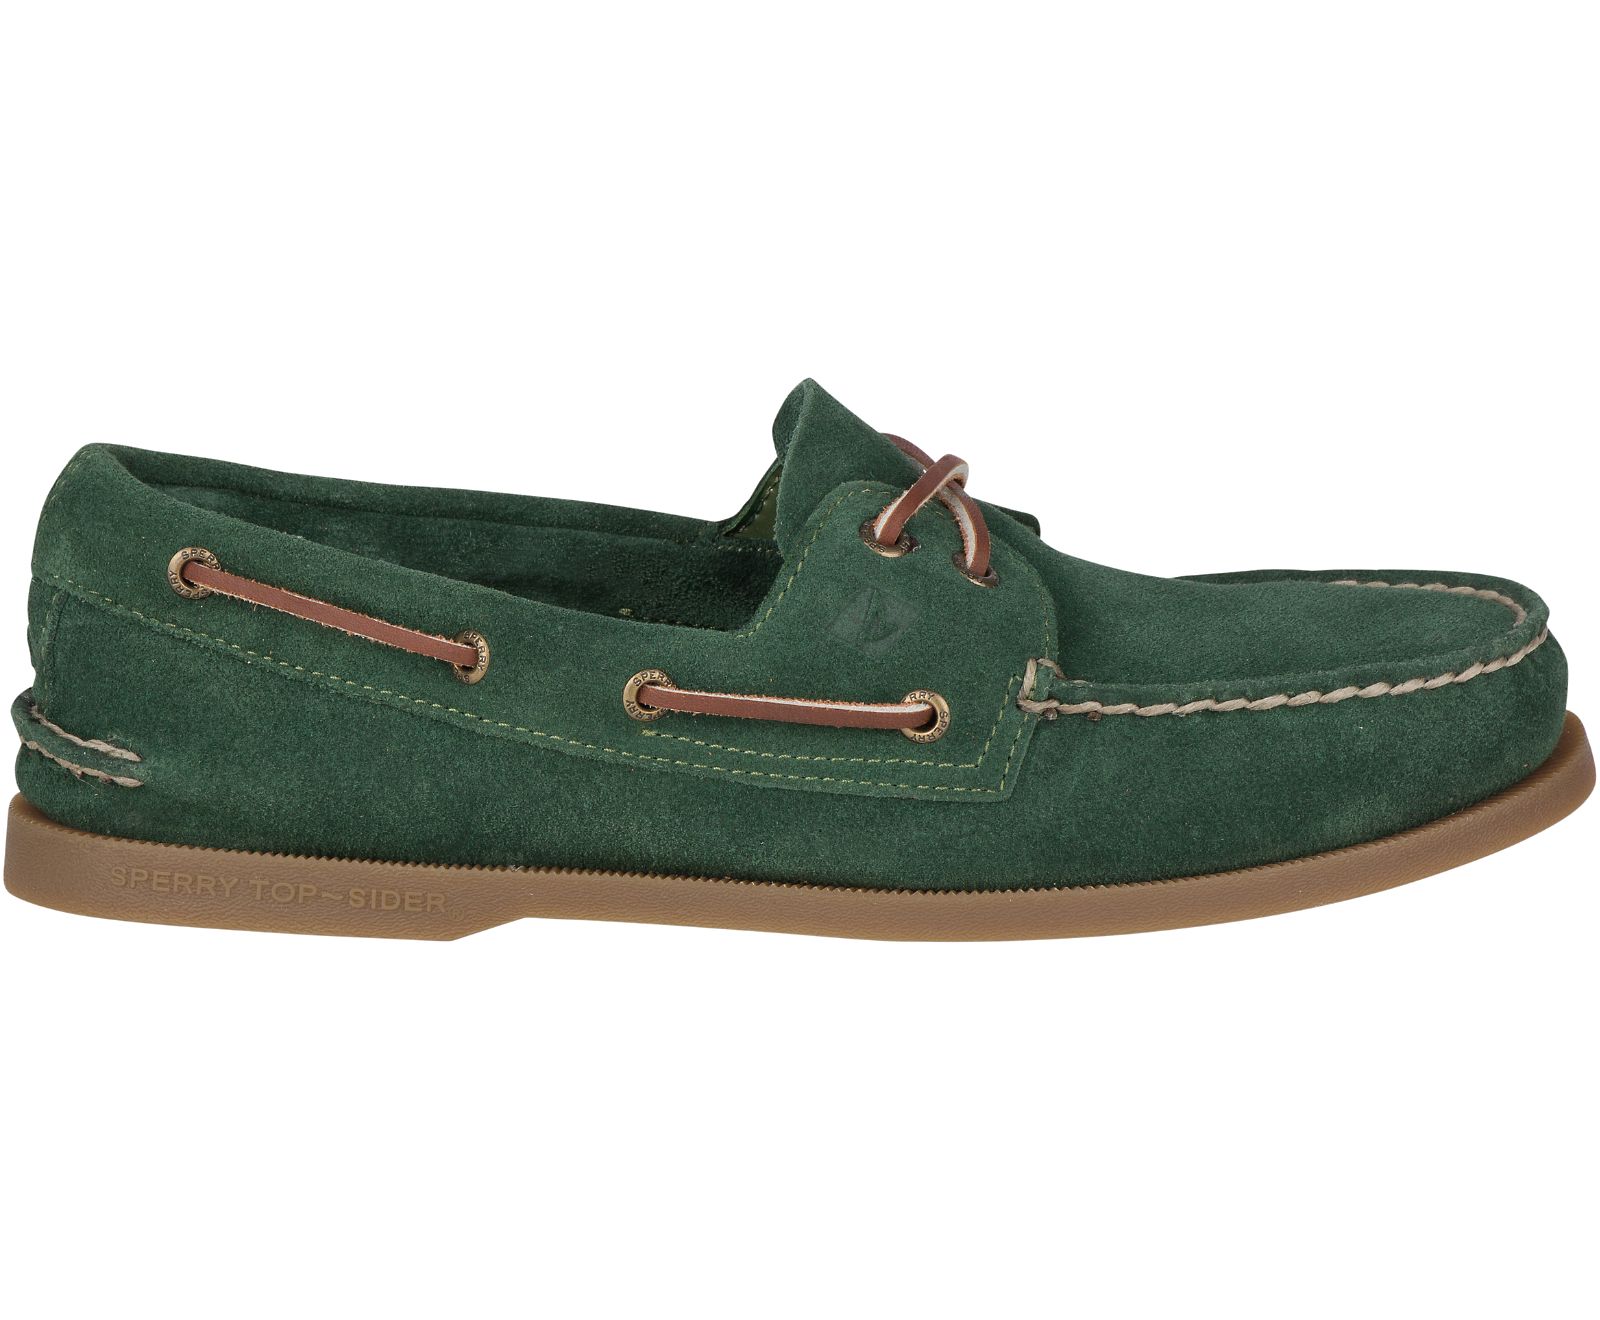 Men's Authentic Original Suede Boat Shoe - Olive